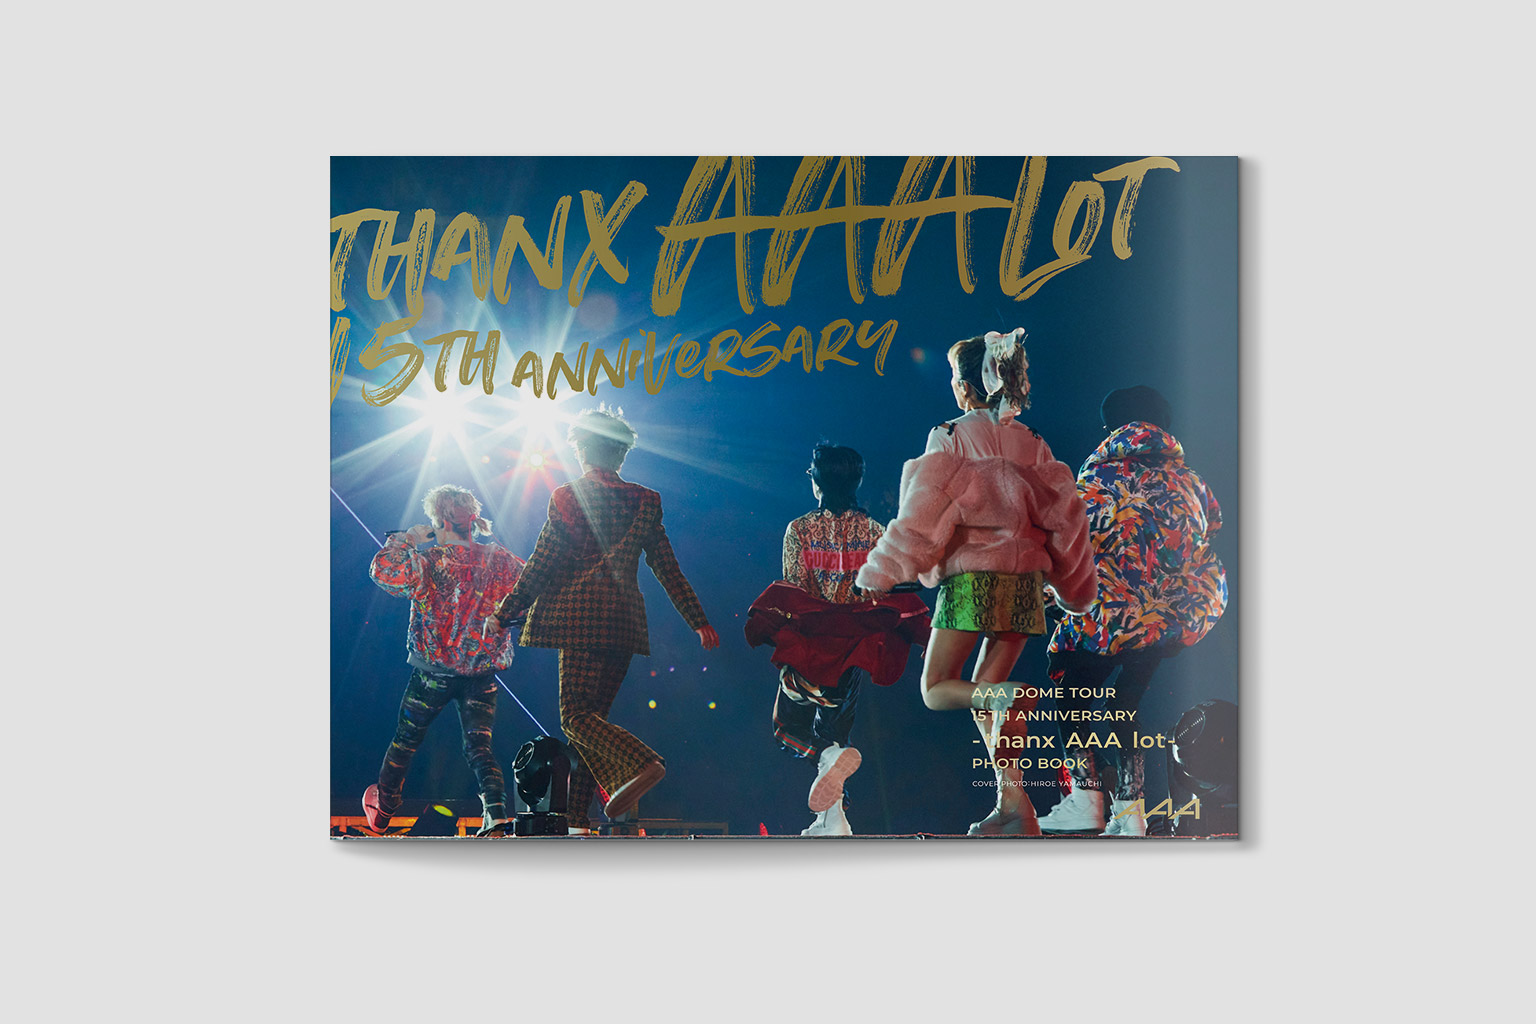 AAA DOME TOUR 15th ANNIVERSARY -thanx AAA lot-